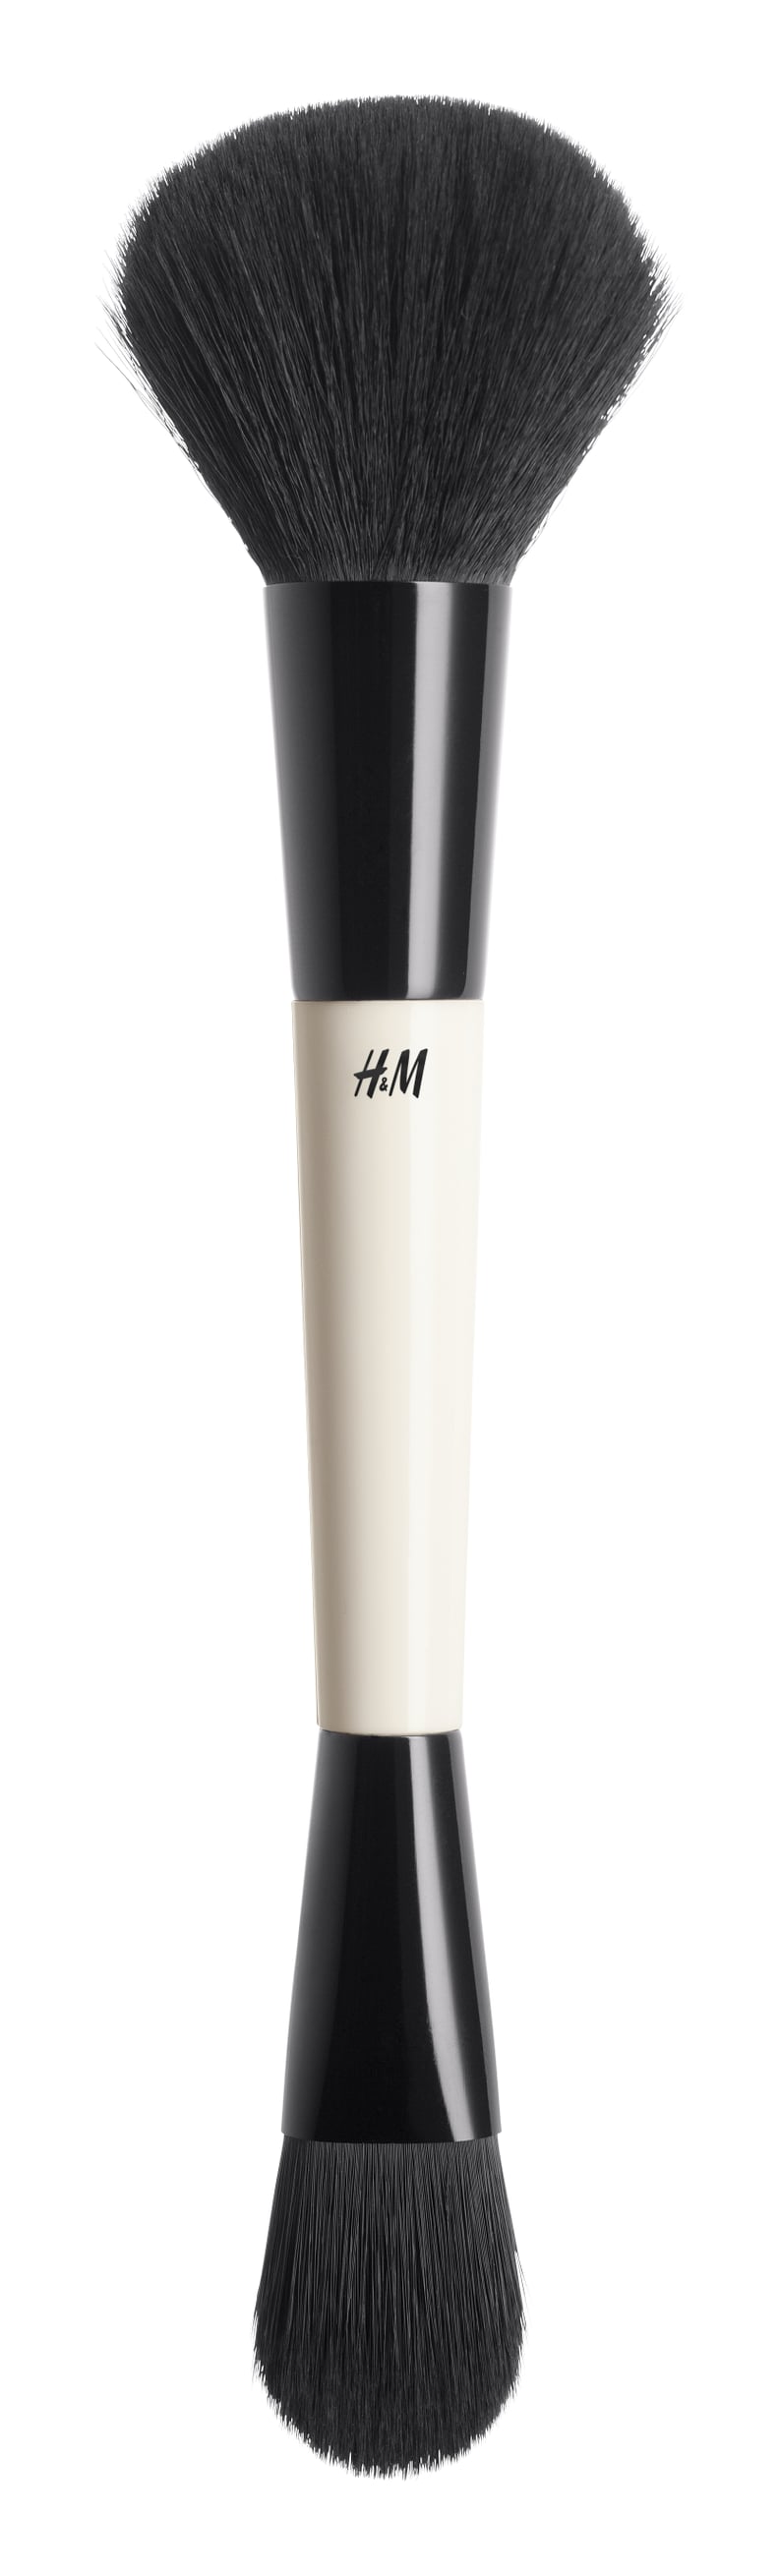 H&M Beauty Powder and Foundation Brush